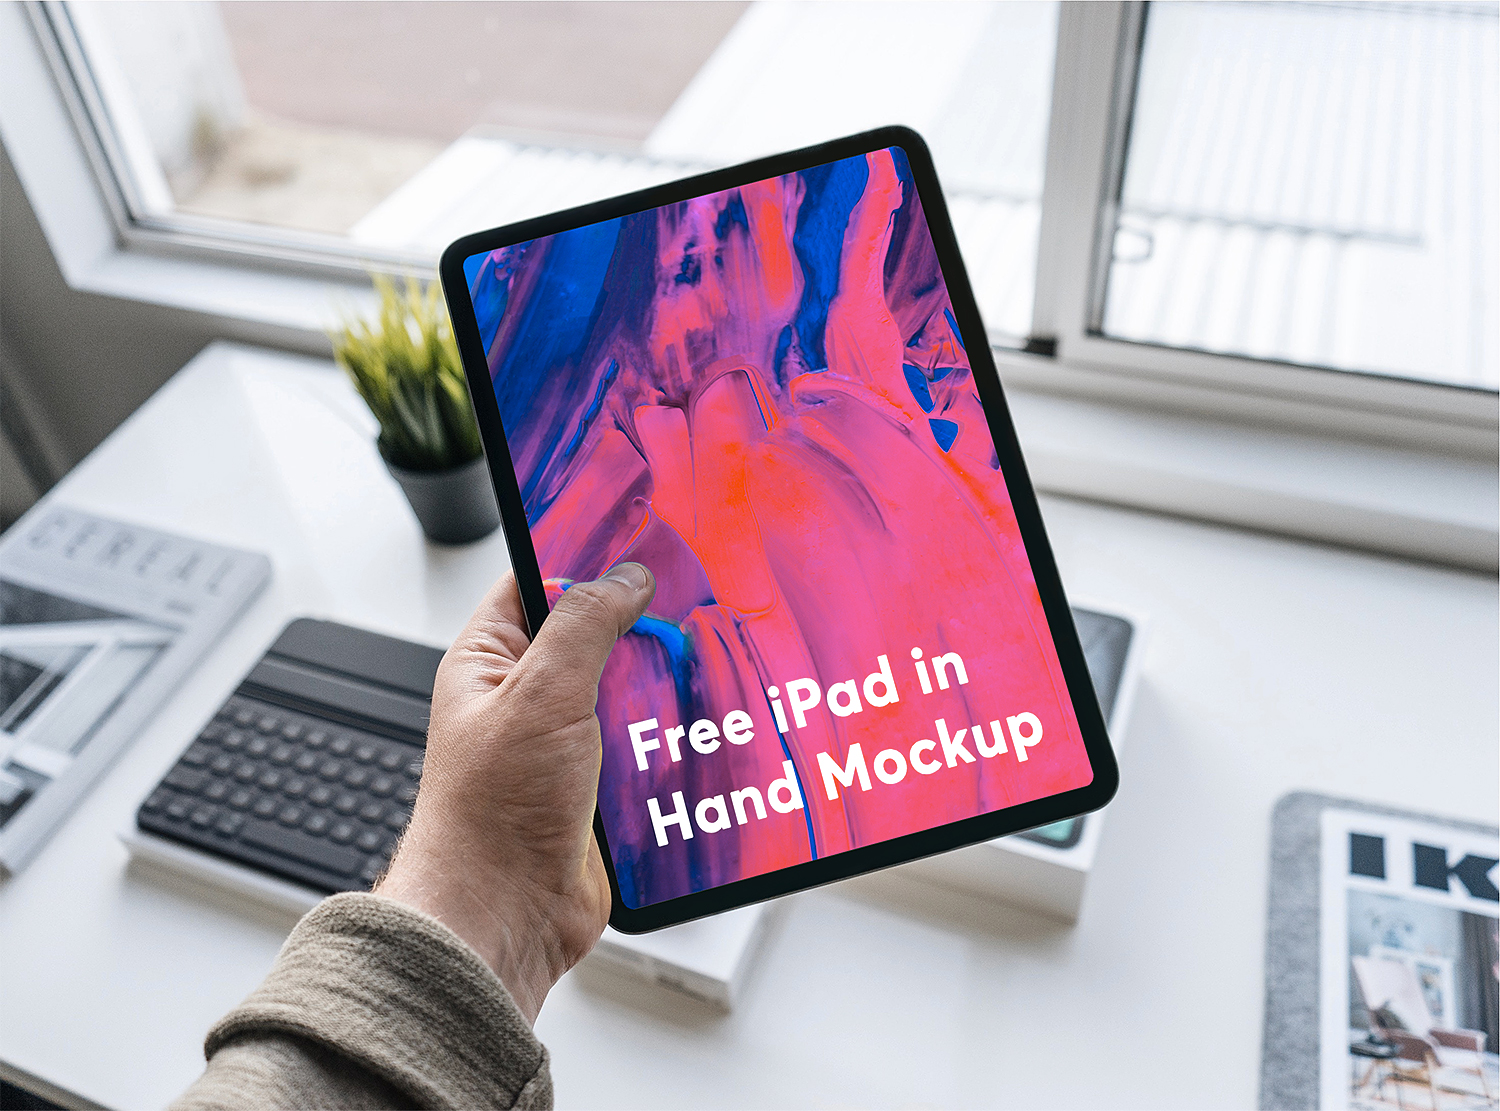 Free iPad Pro 2018 in Hand Mockup